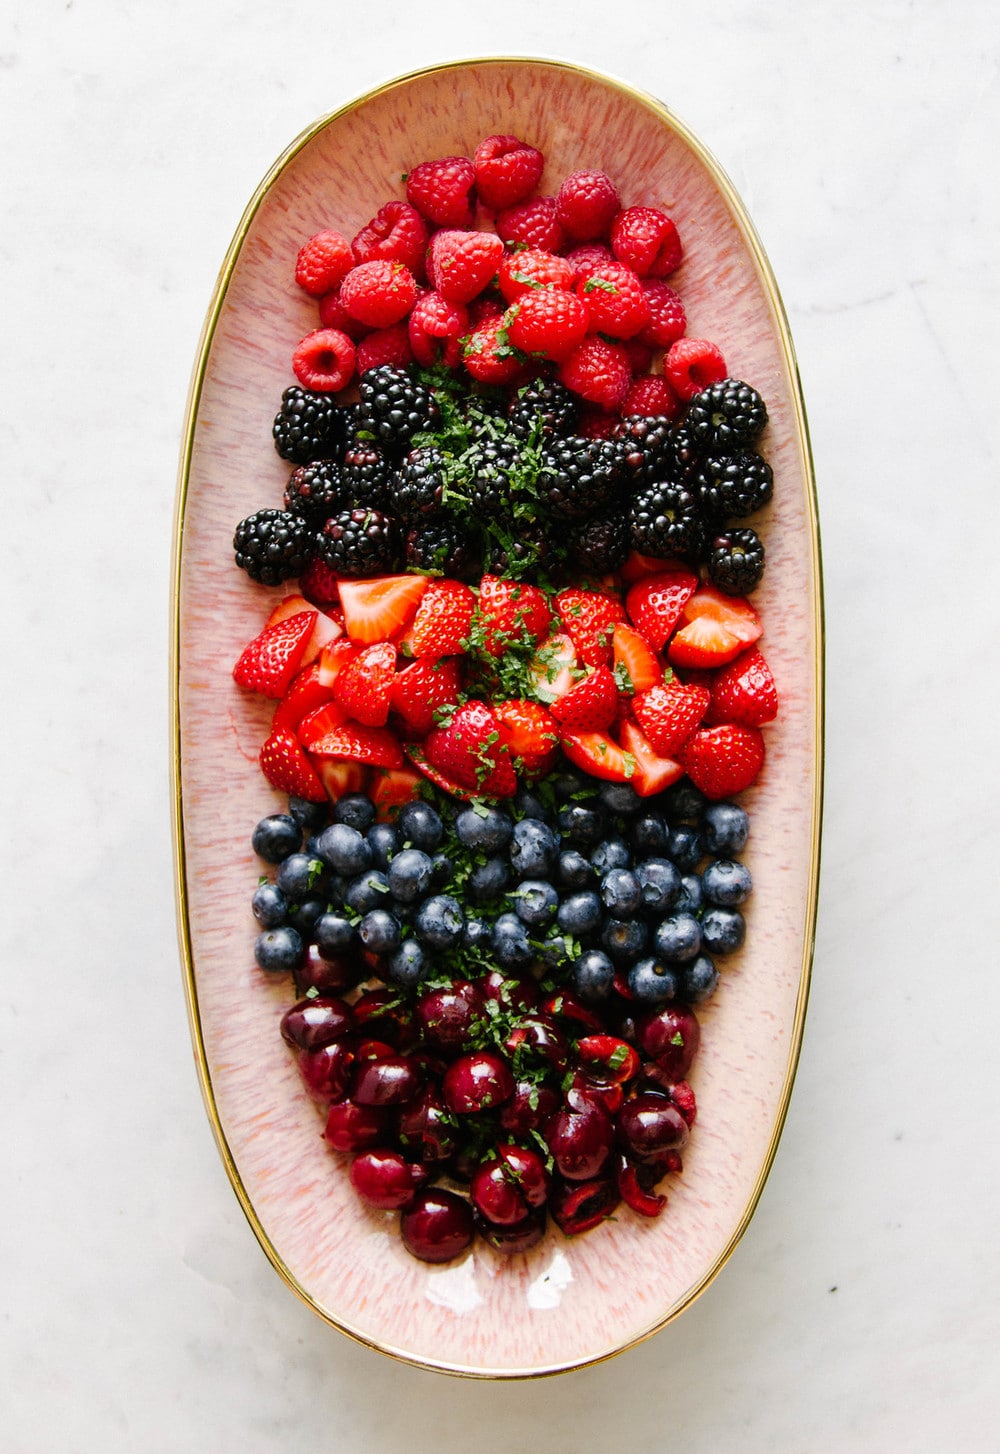 cherries, blueberries, strawberries, blackberries and raspberries on a pink plater sprinkled with fresh mint